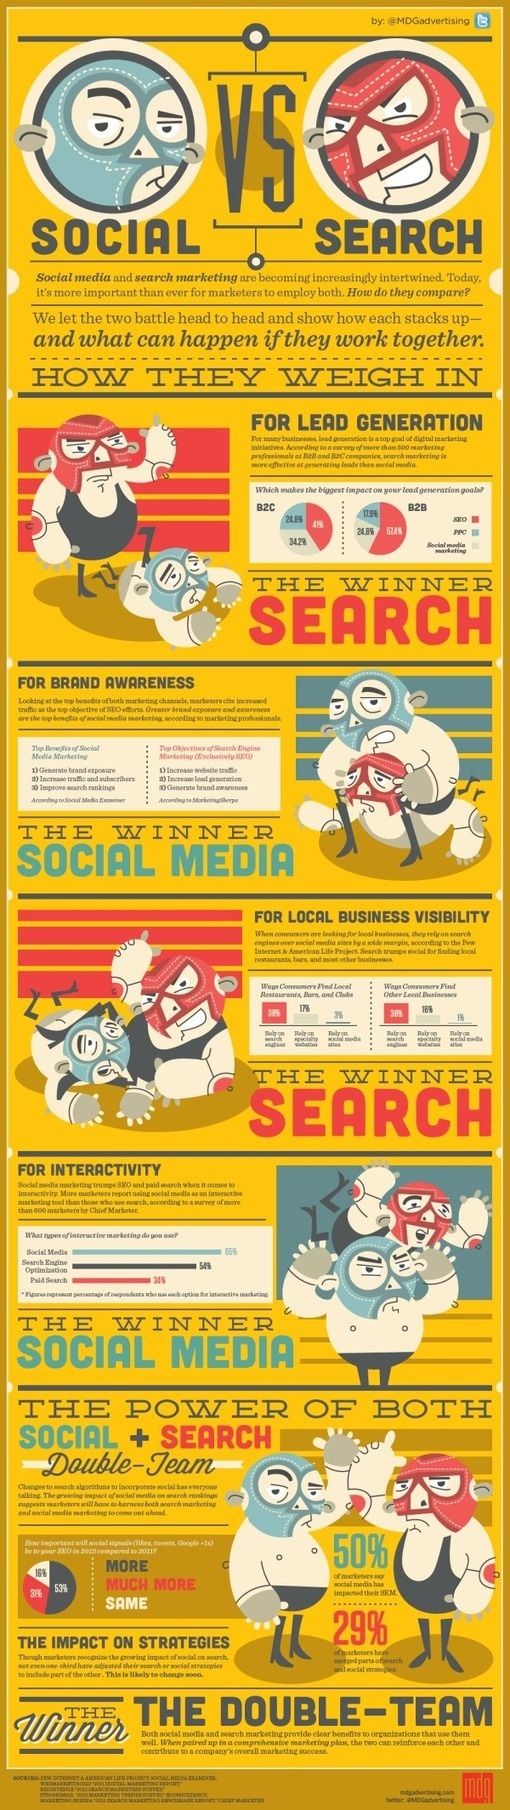 Social vs. Search